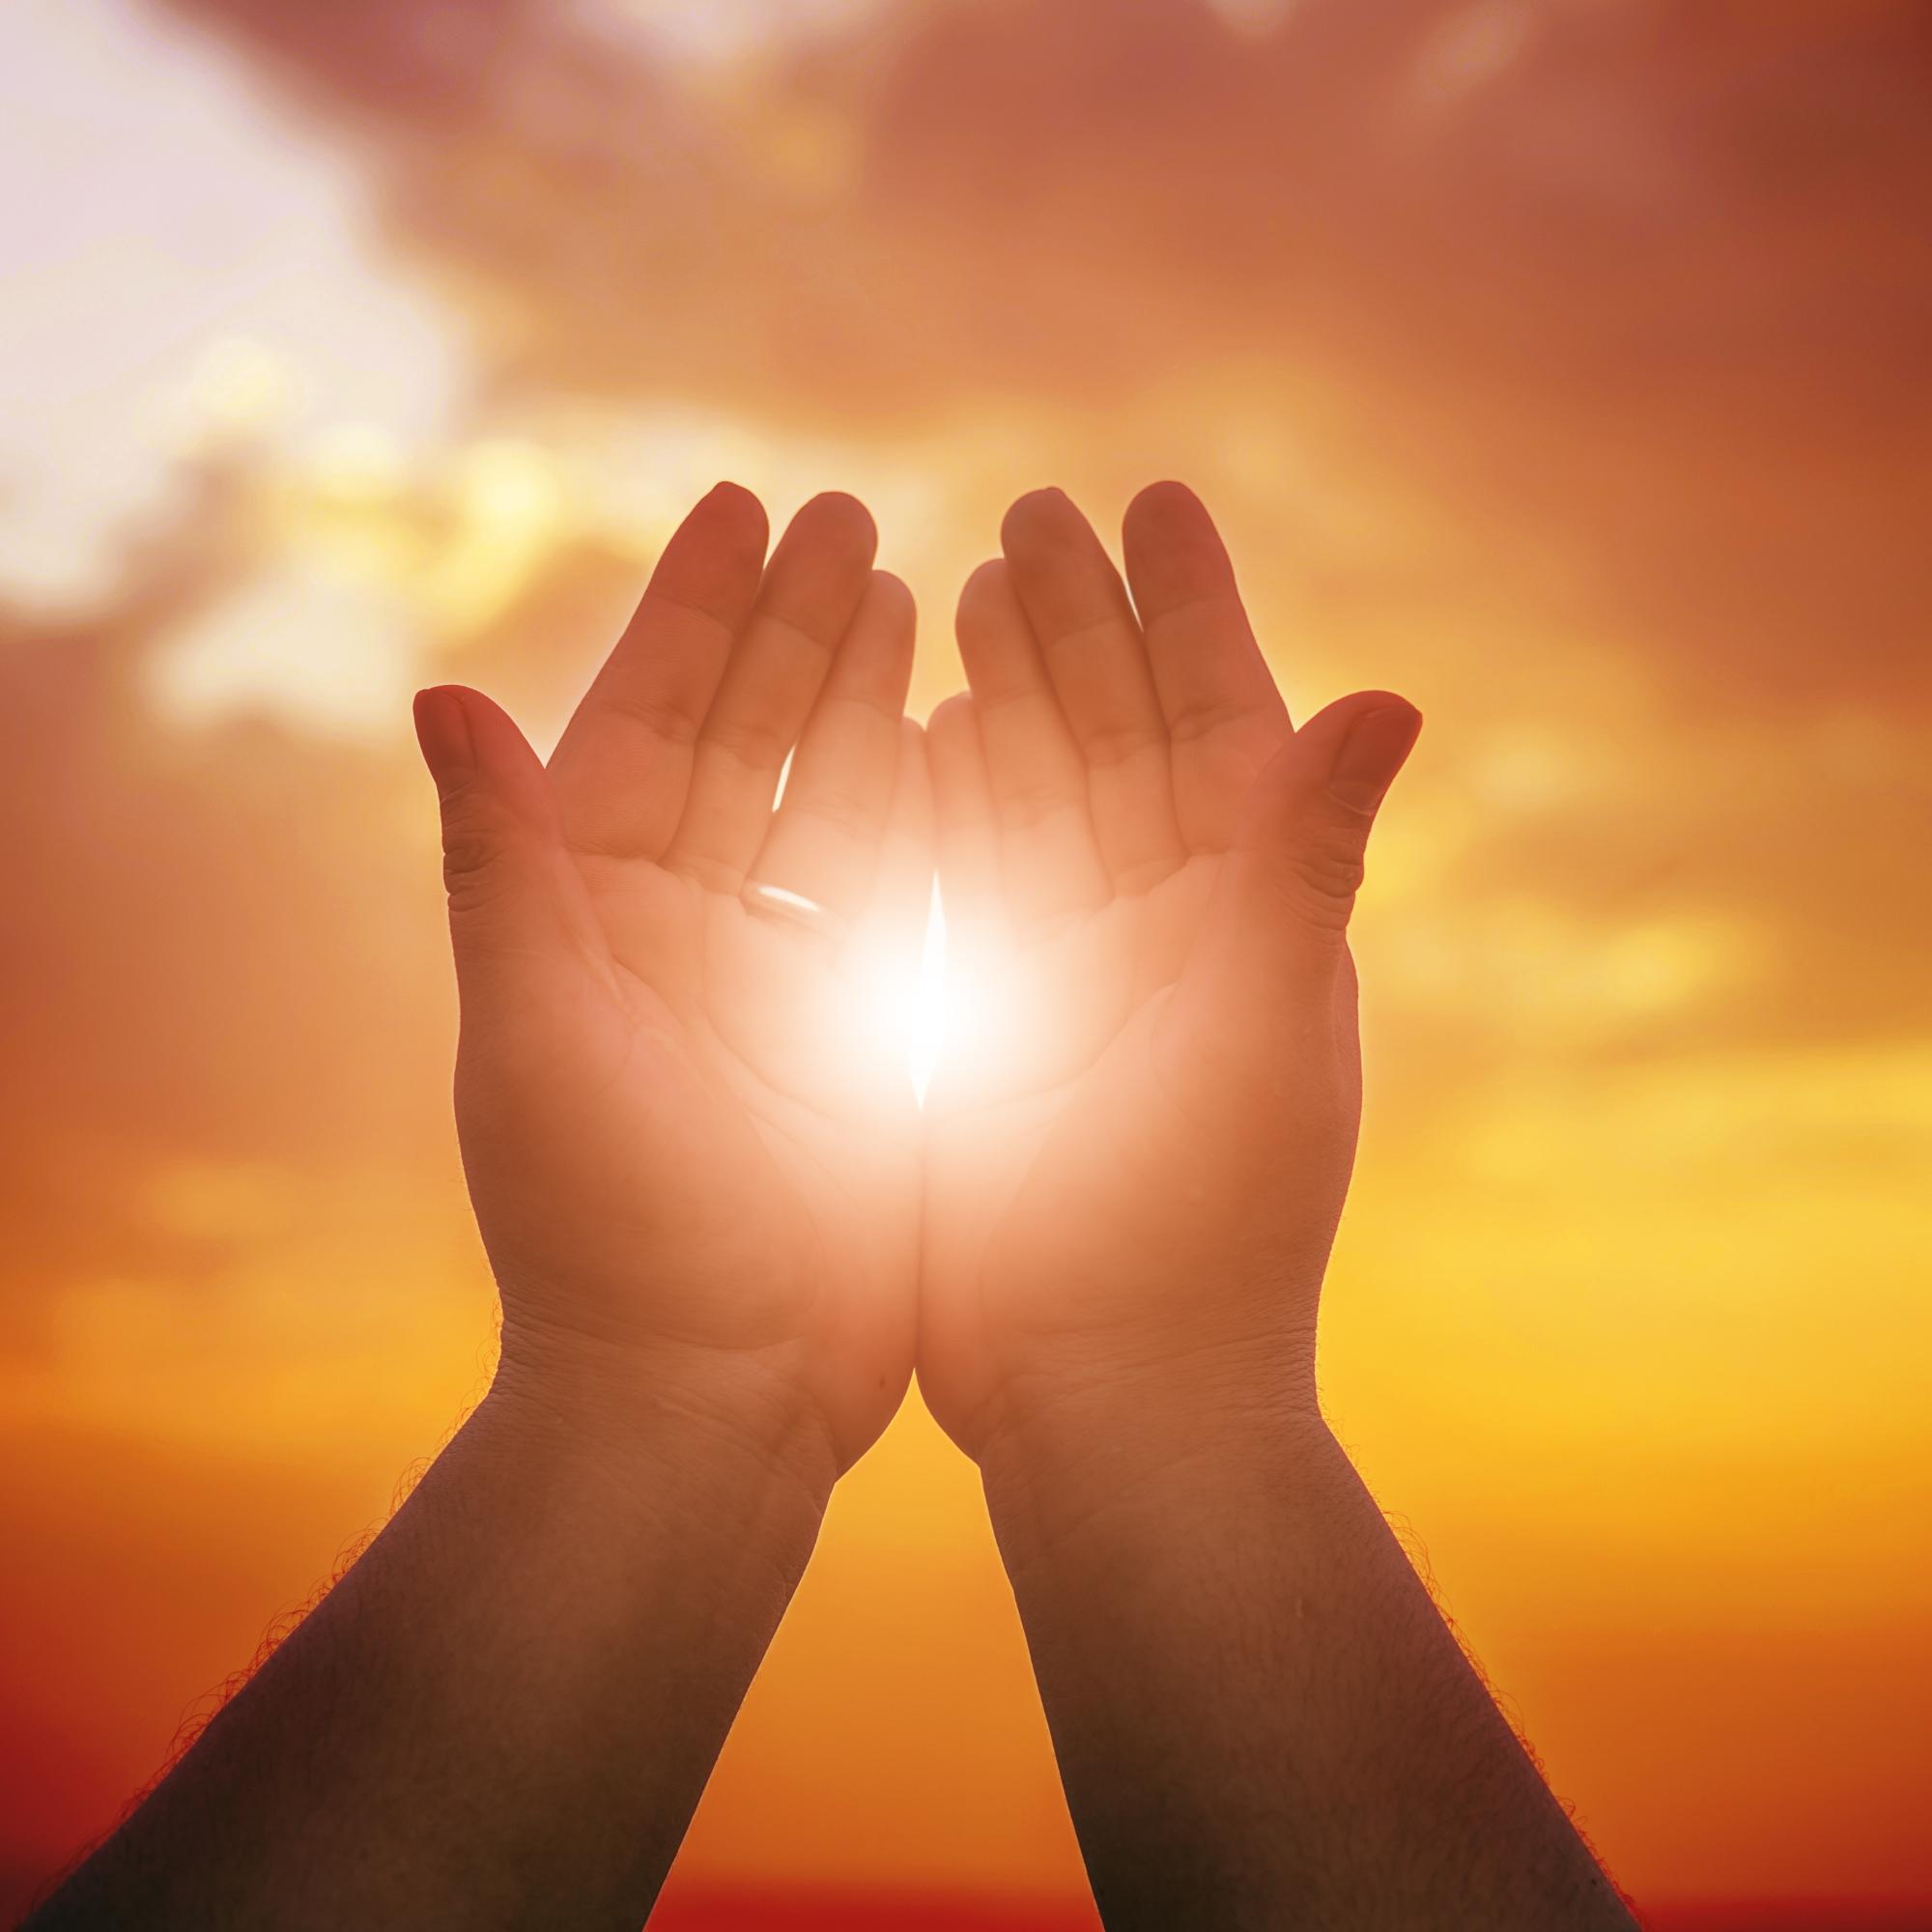 Glaube|Gebet|Handflächen